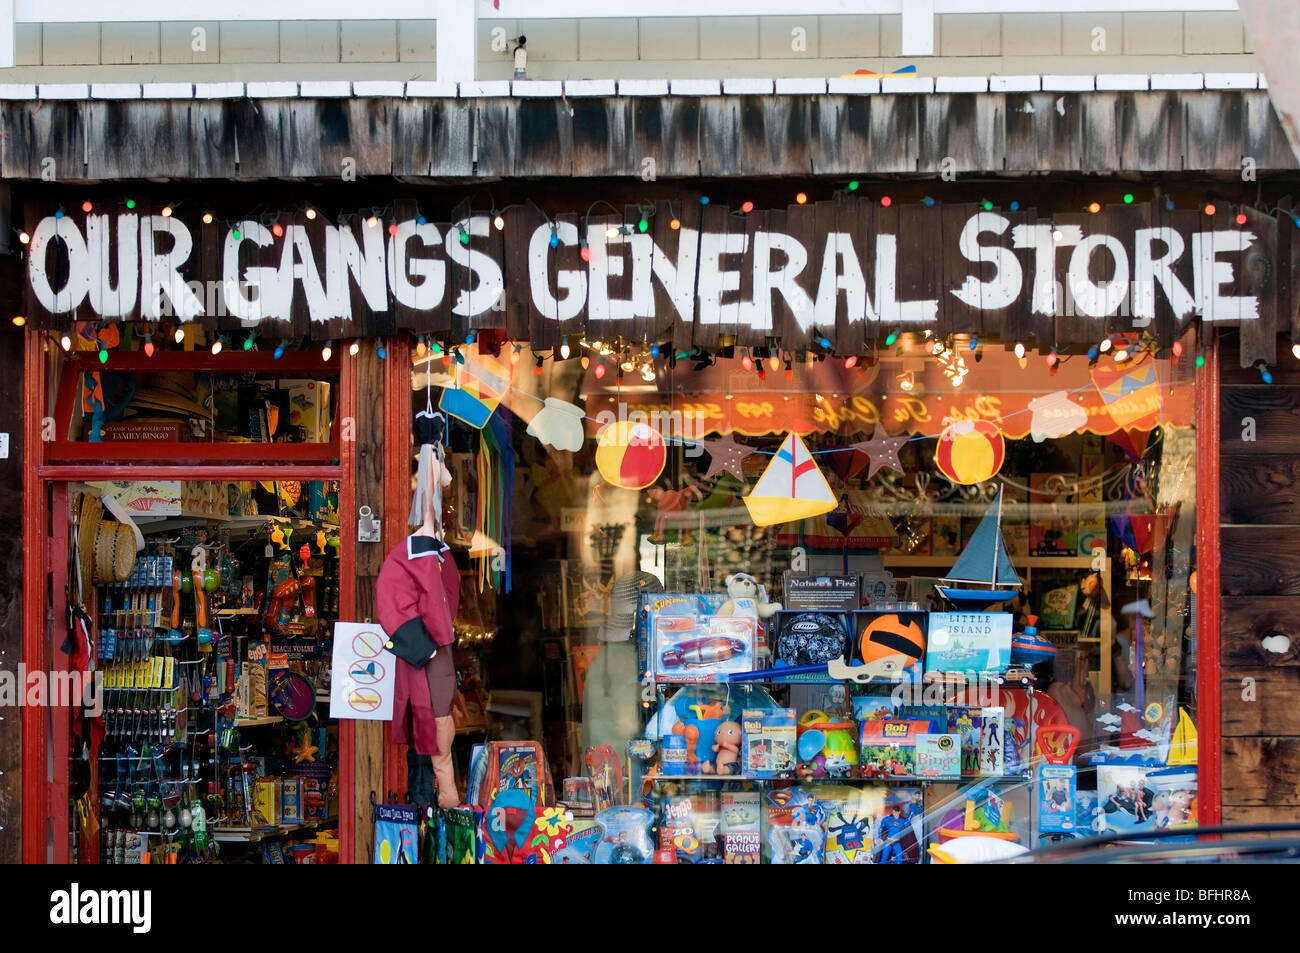 'Our Gangs General Store' on Balboa Island in Newport Beach, CA. Stock Photo